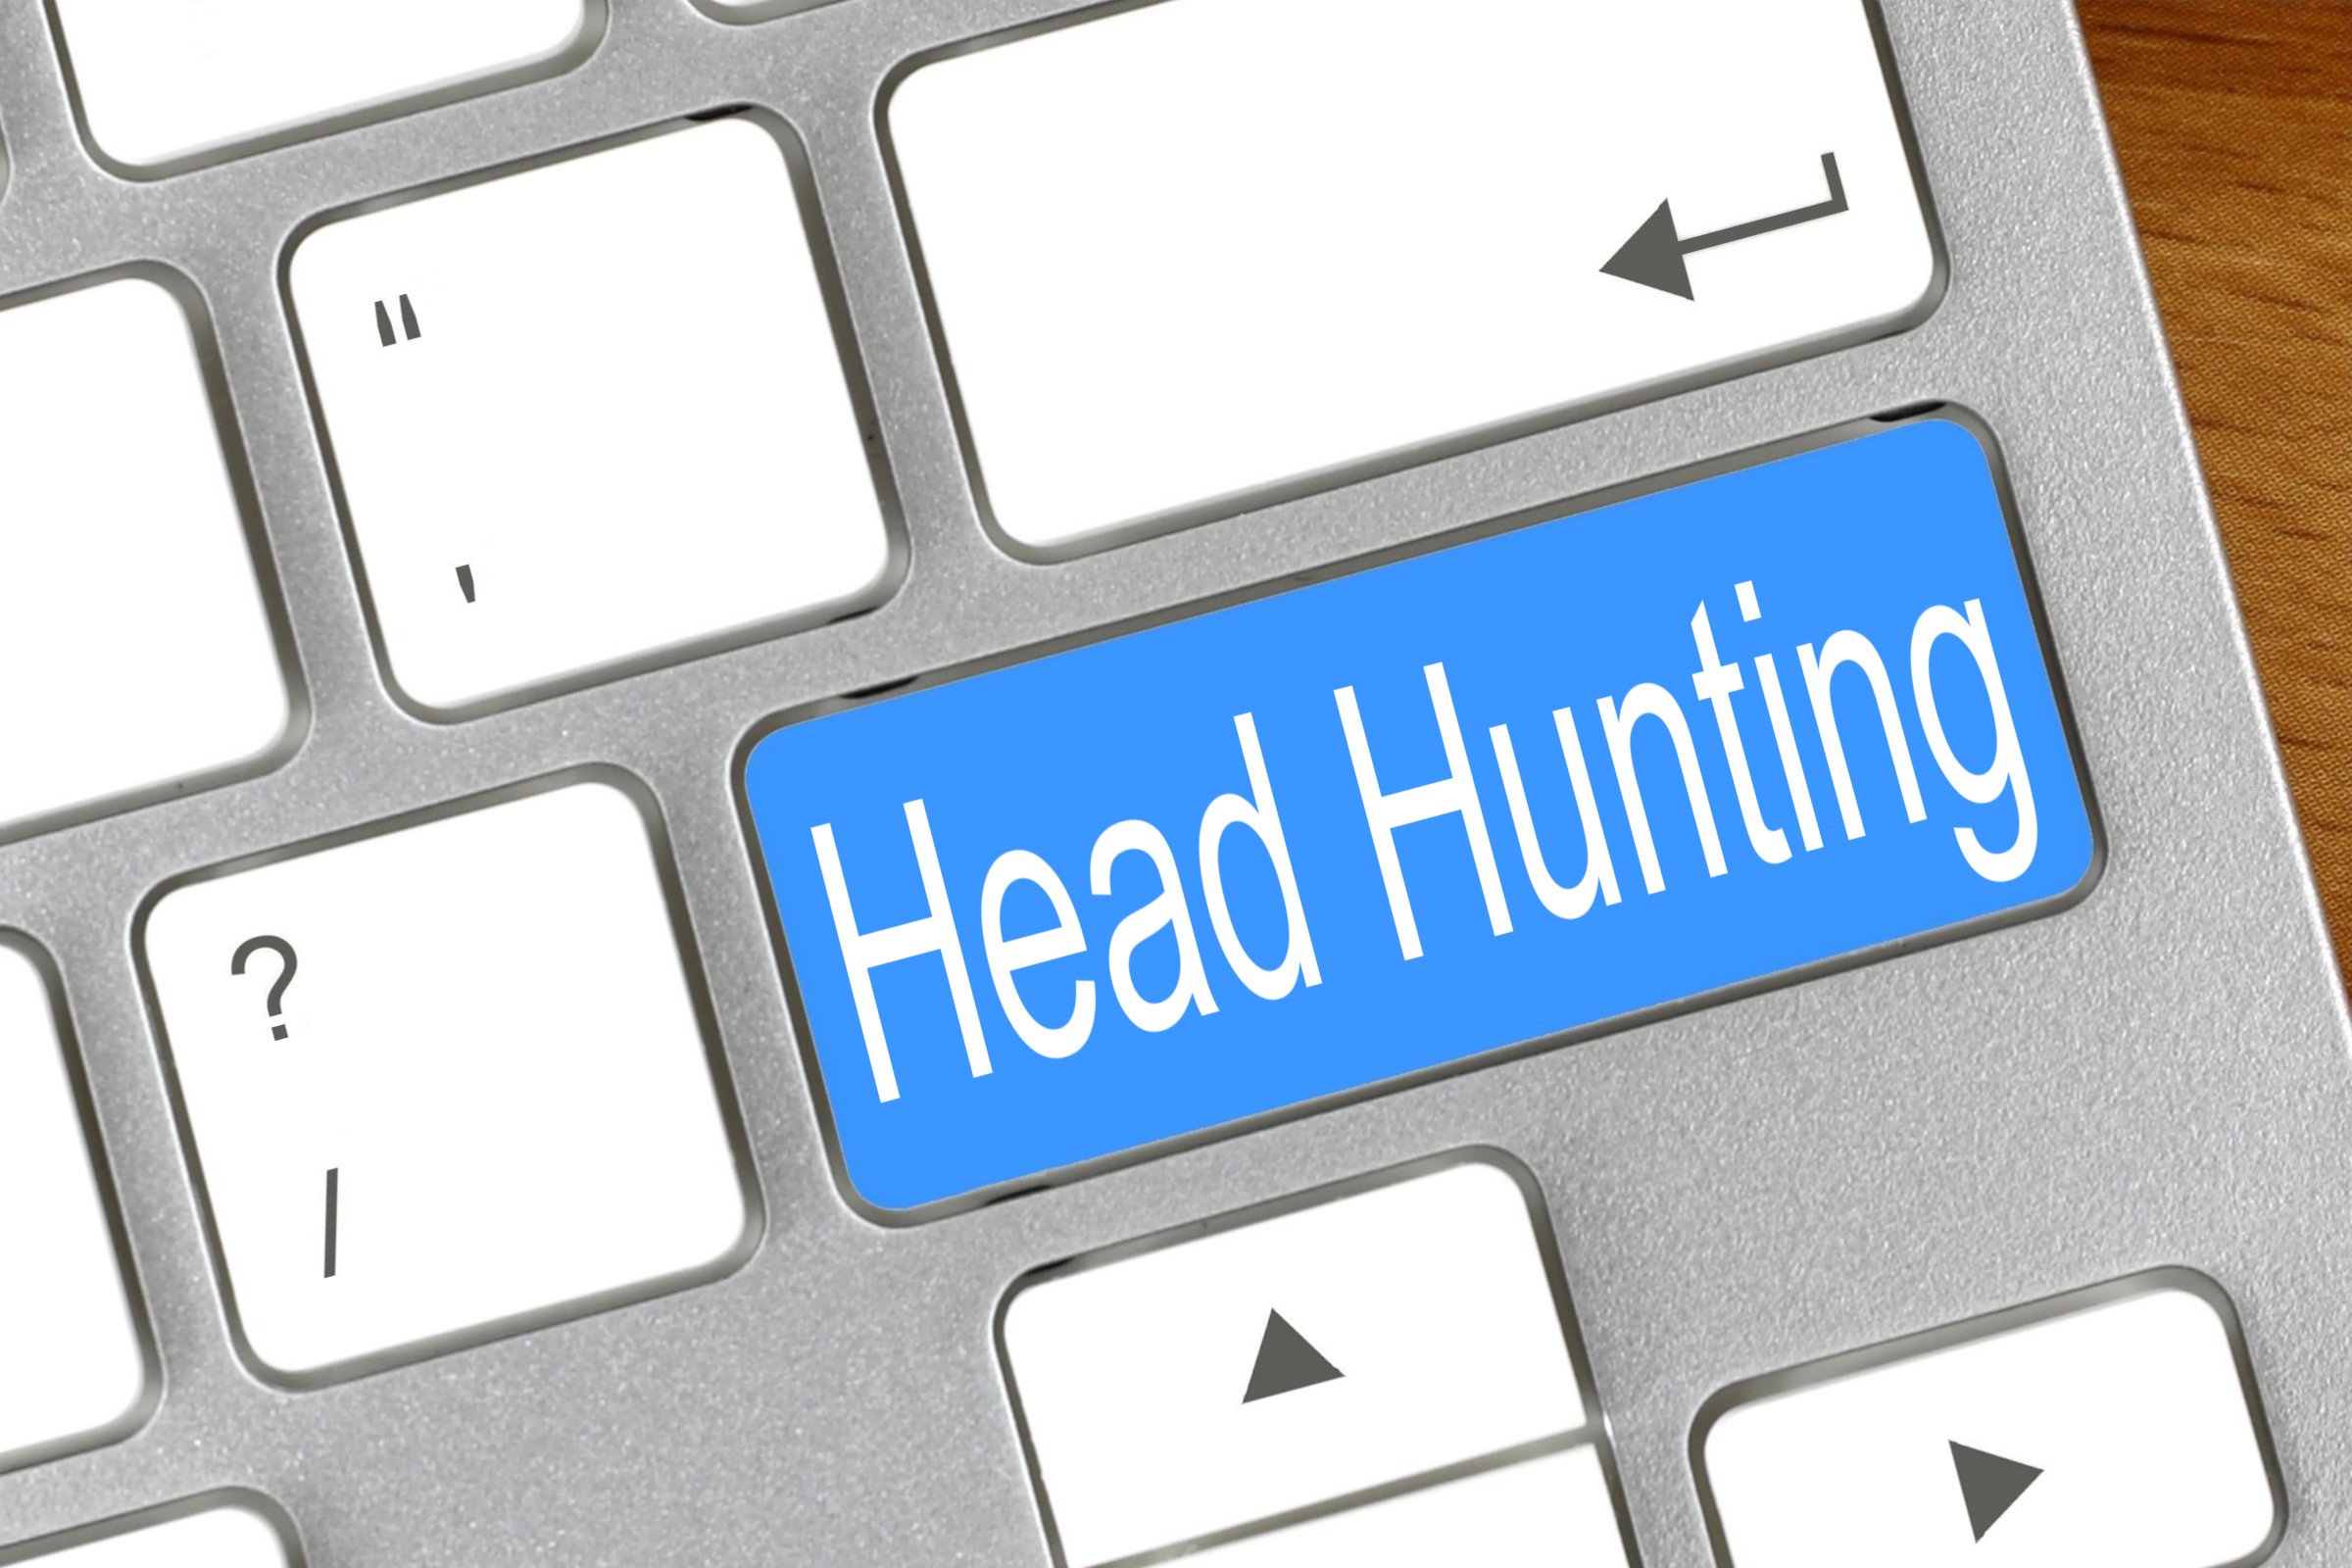 head hunting